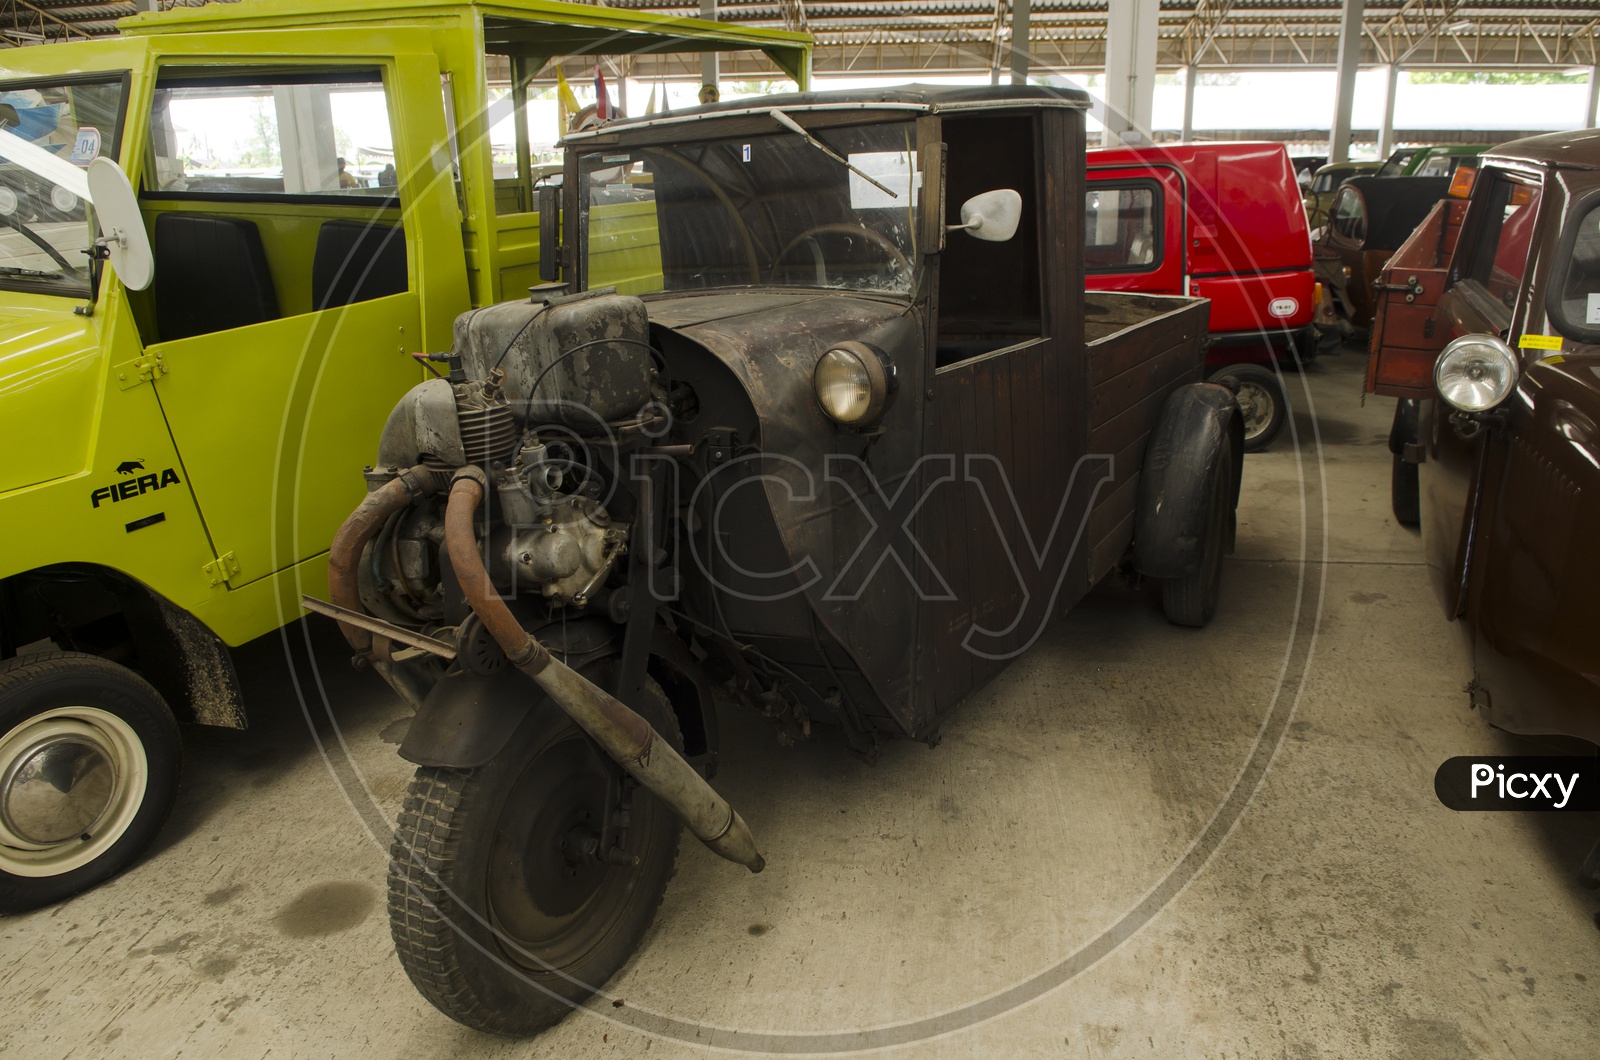 Old Motor Engine Car In Vintage Car Expo